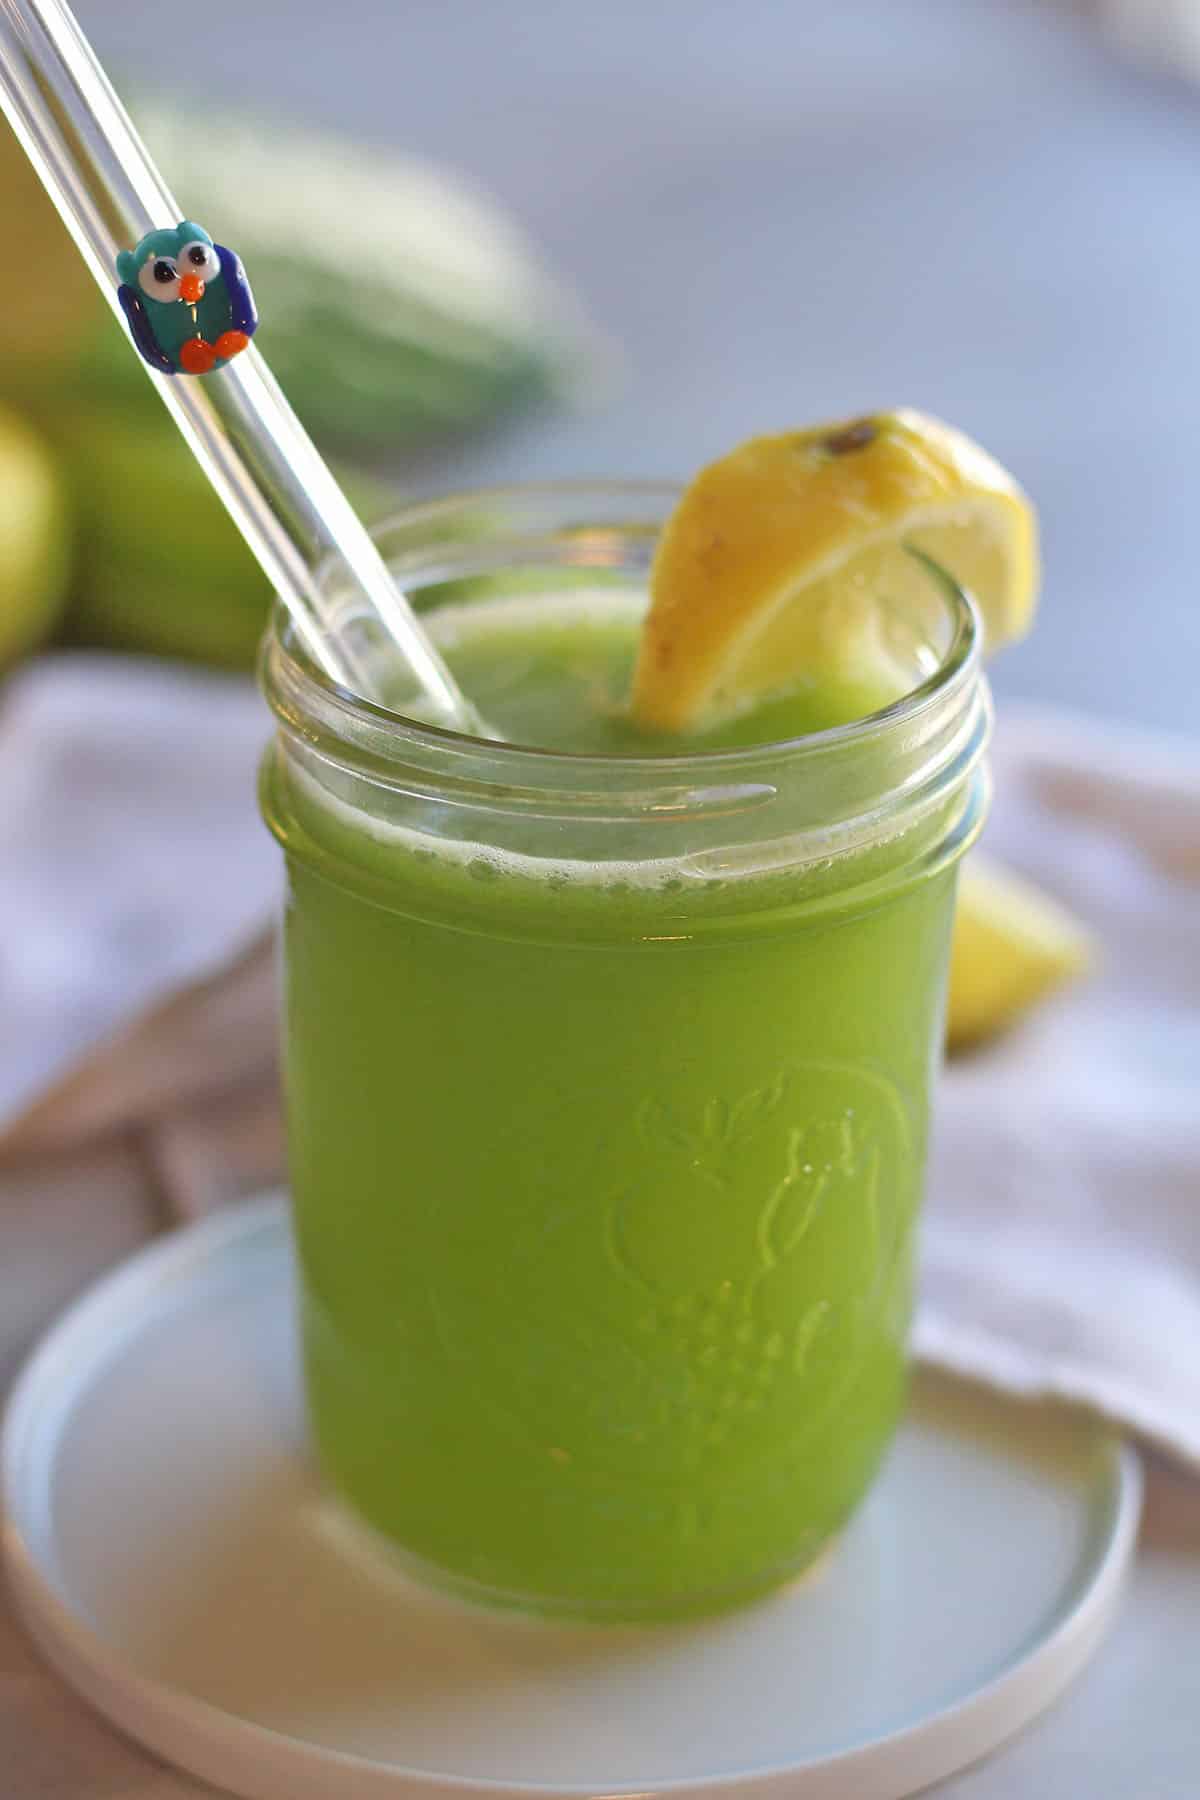 Glass straw in celery cucumber juice with lemon slice on rim.